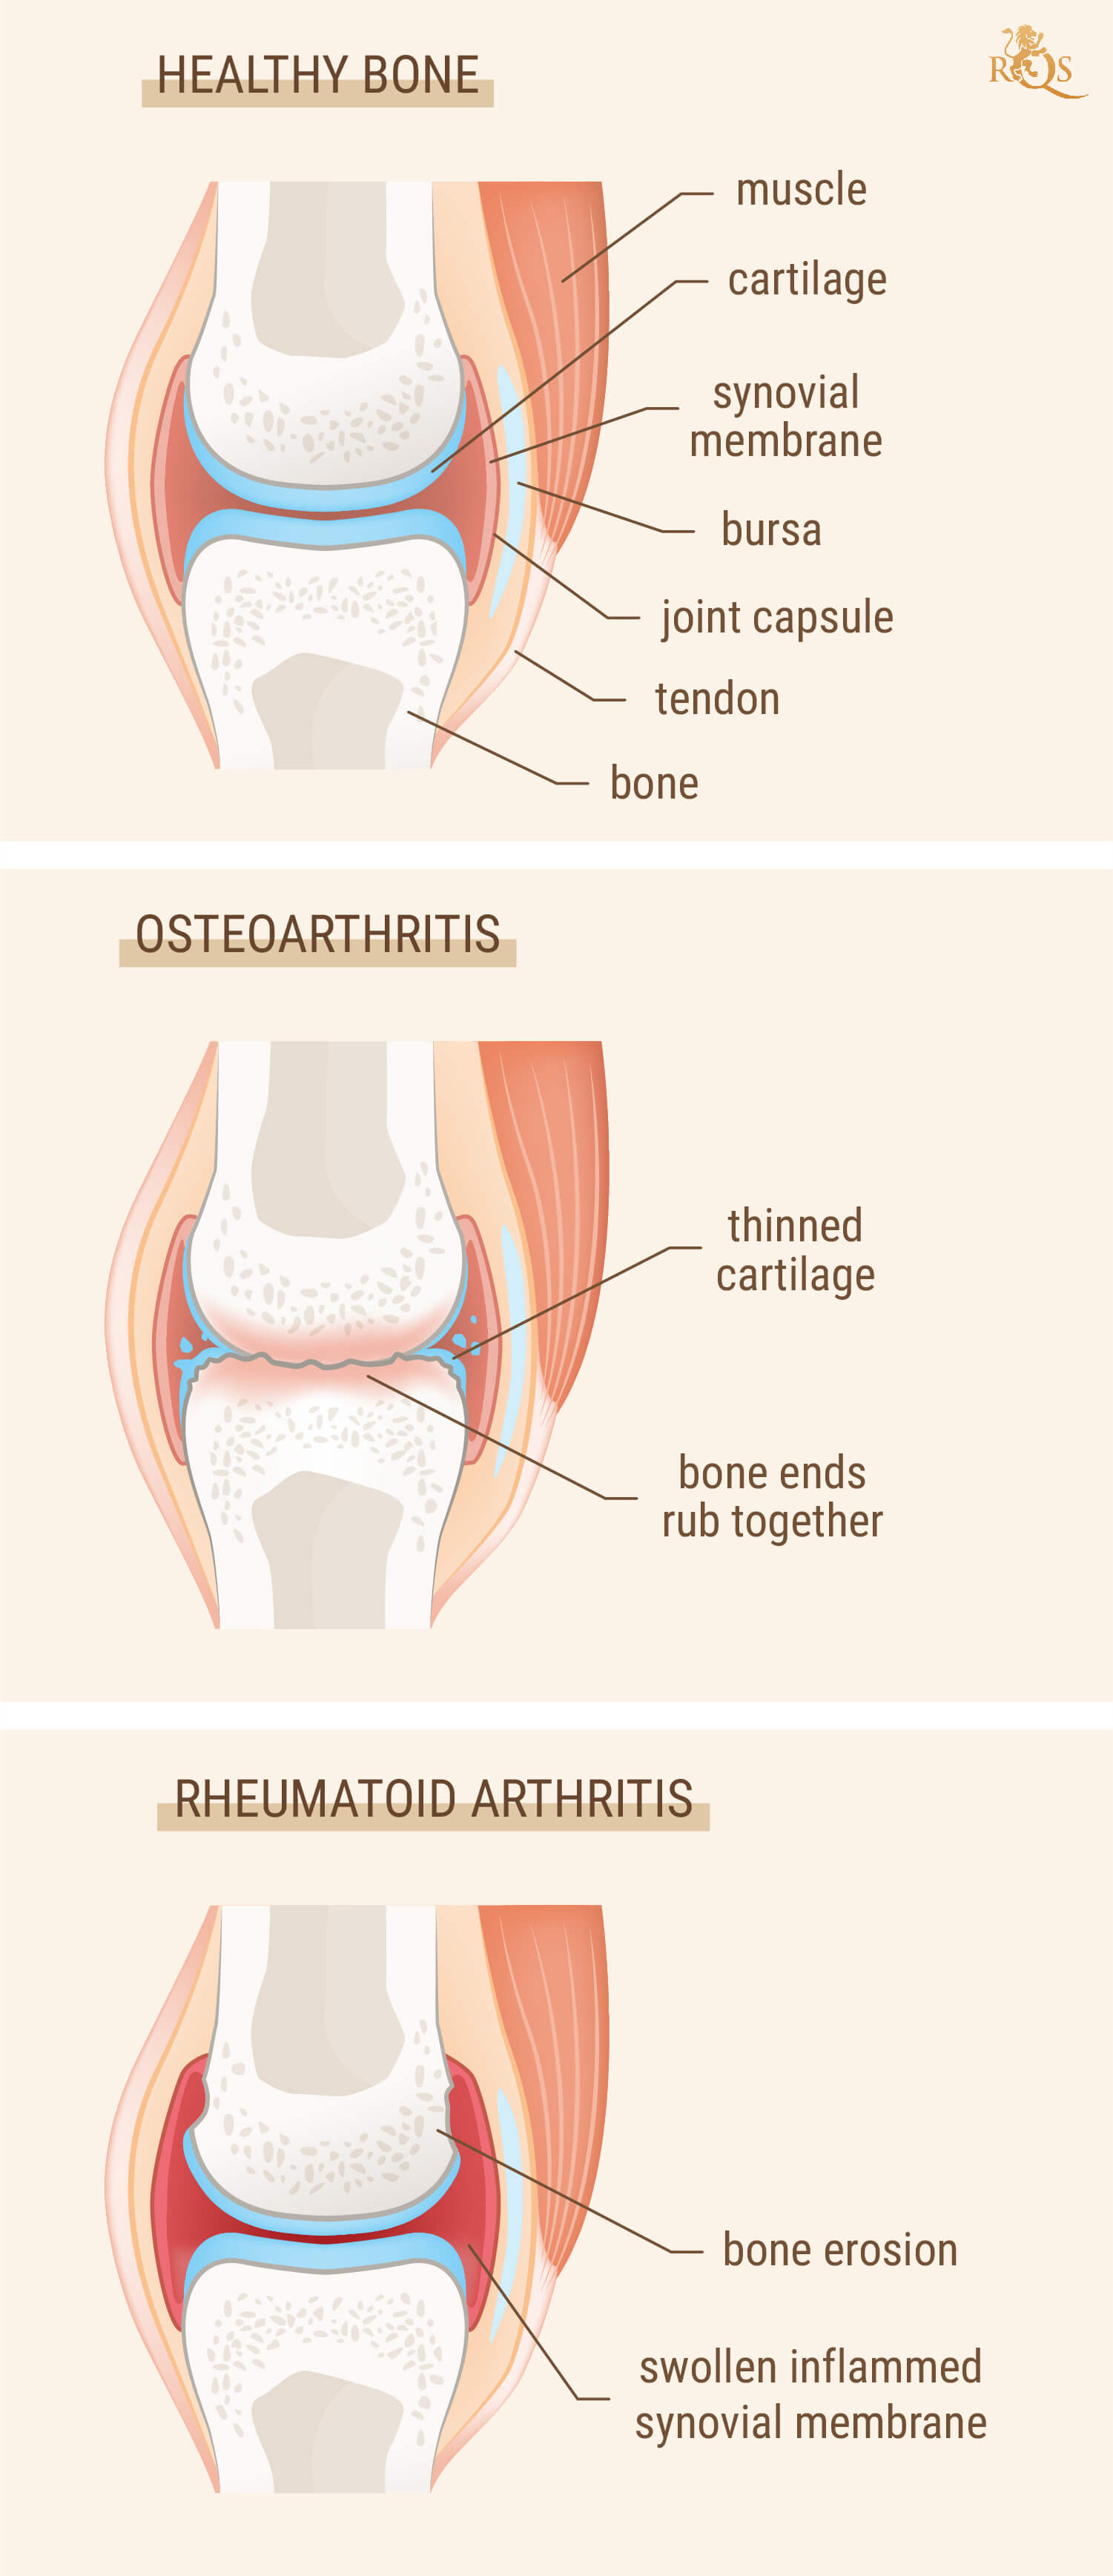 Are arthritis and rheumatism the same?